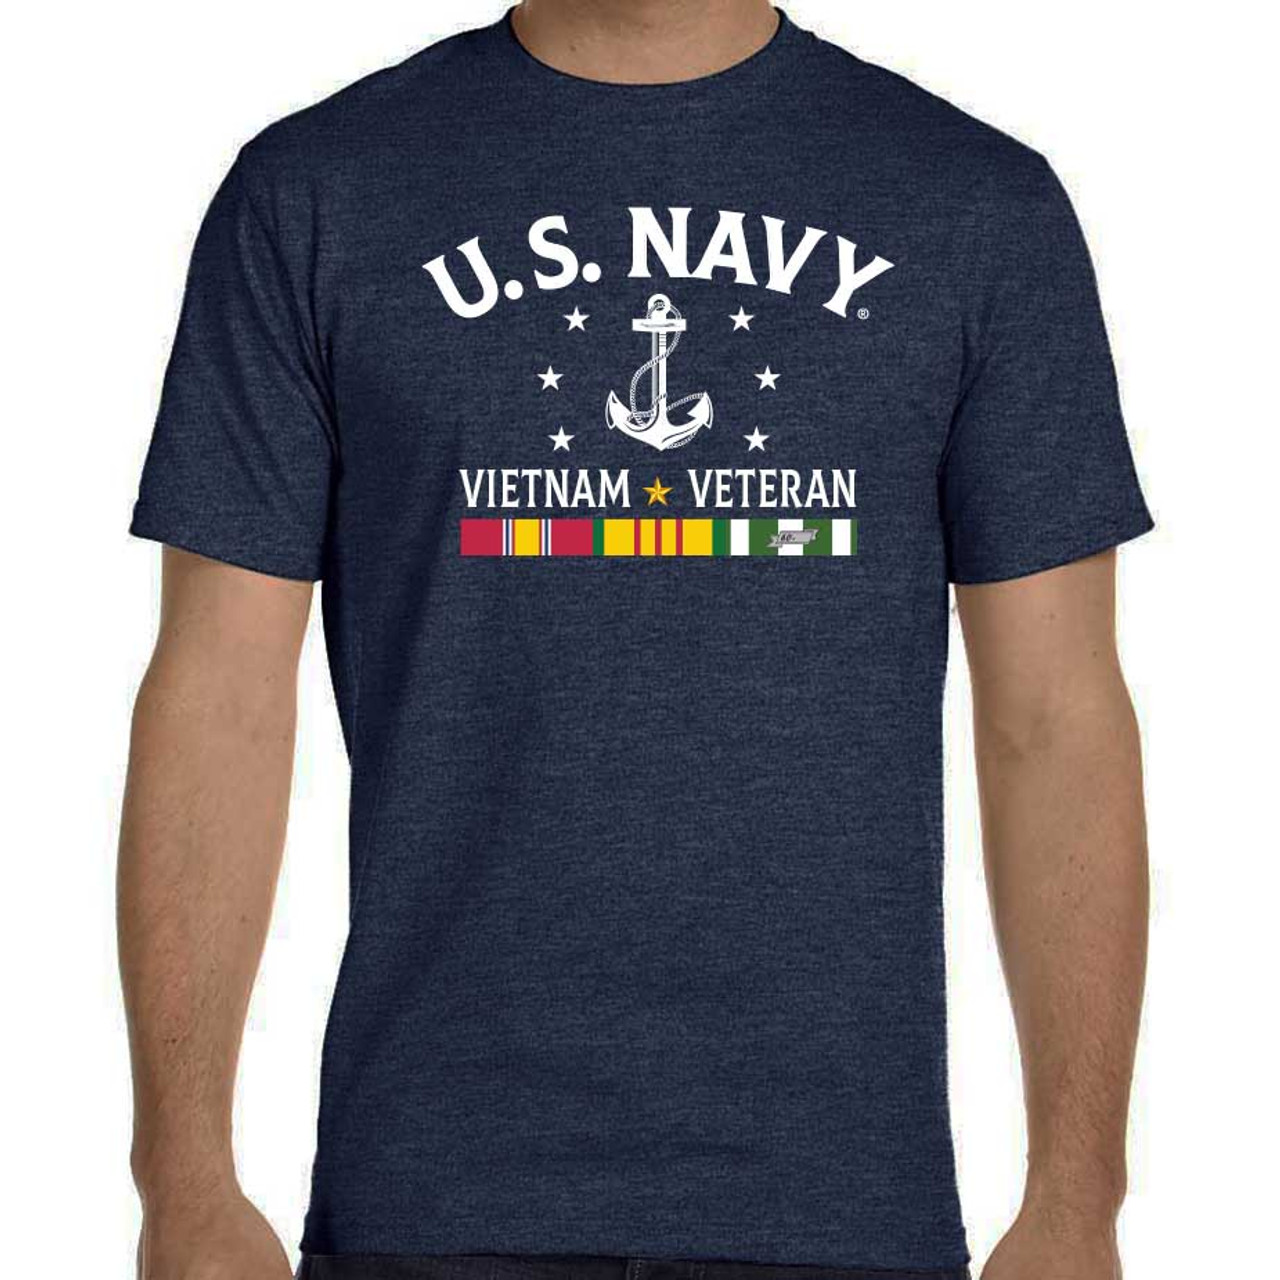 officially licensed us navy vietnam veteran tshirt 3 ribbons and anchor s